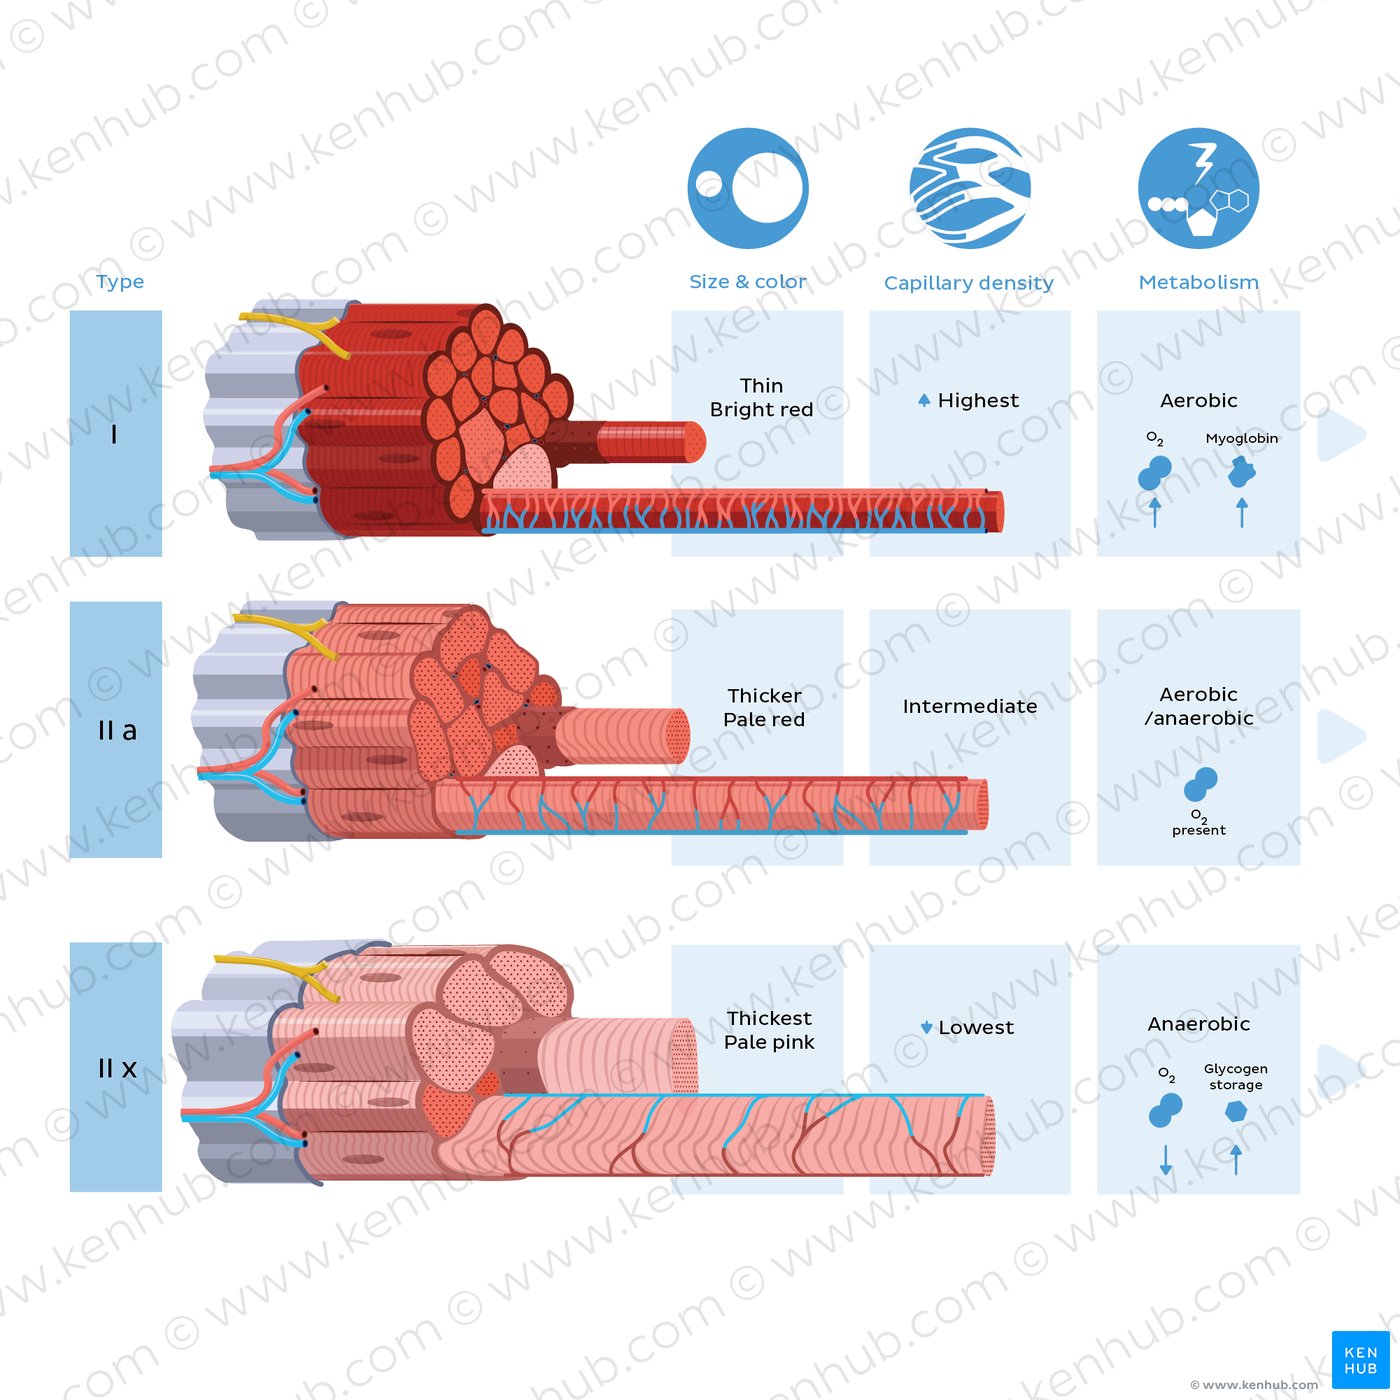 Skeletal muscle fiber types: general features